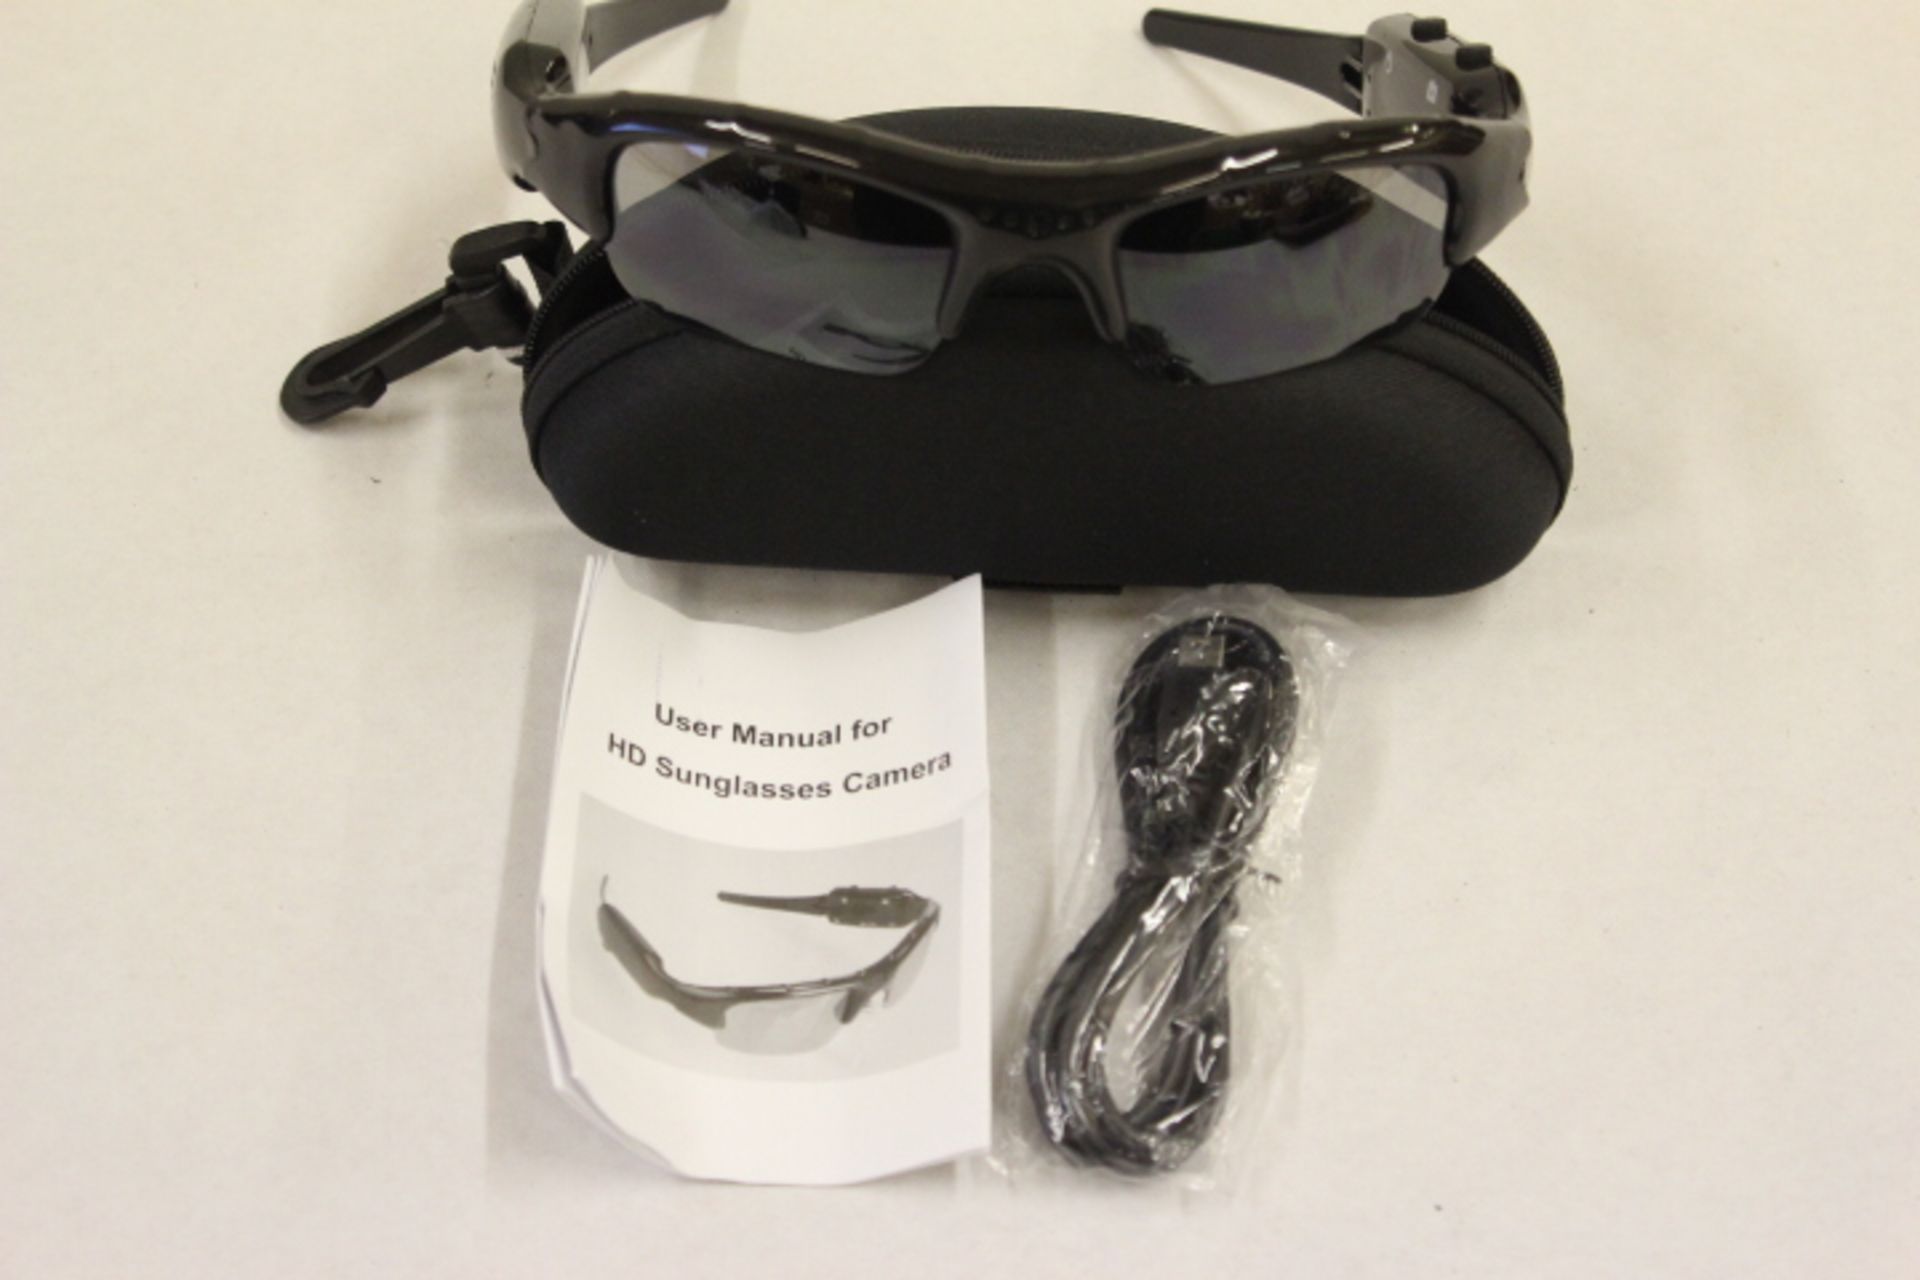 HD Sunglasses Video Camera With Case - Manual & Accessories